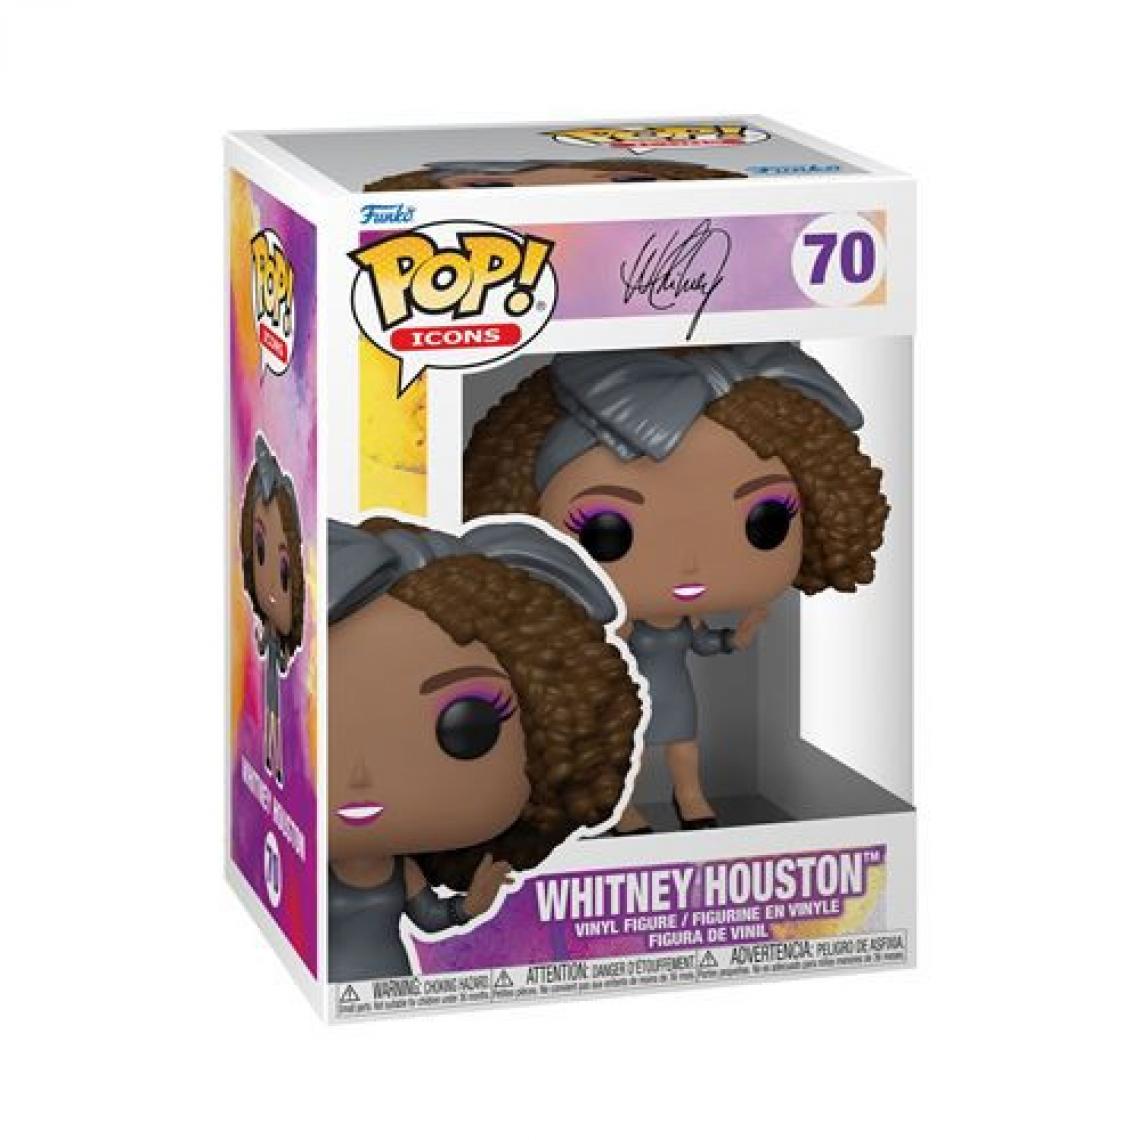 Funko - Figurine Funko Pop Icons Whitney Houston HWIK - Animaux